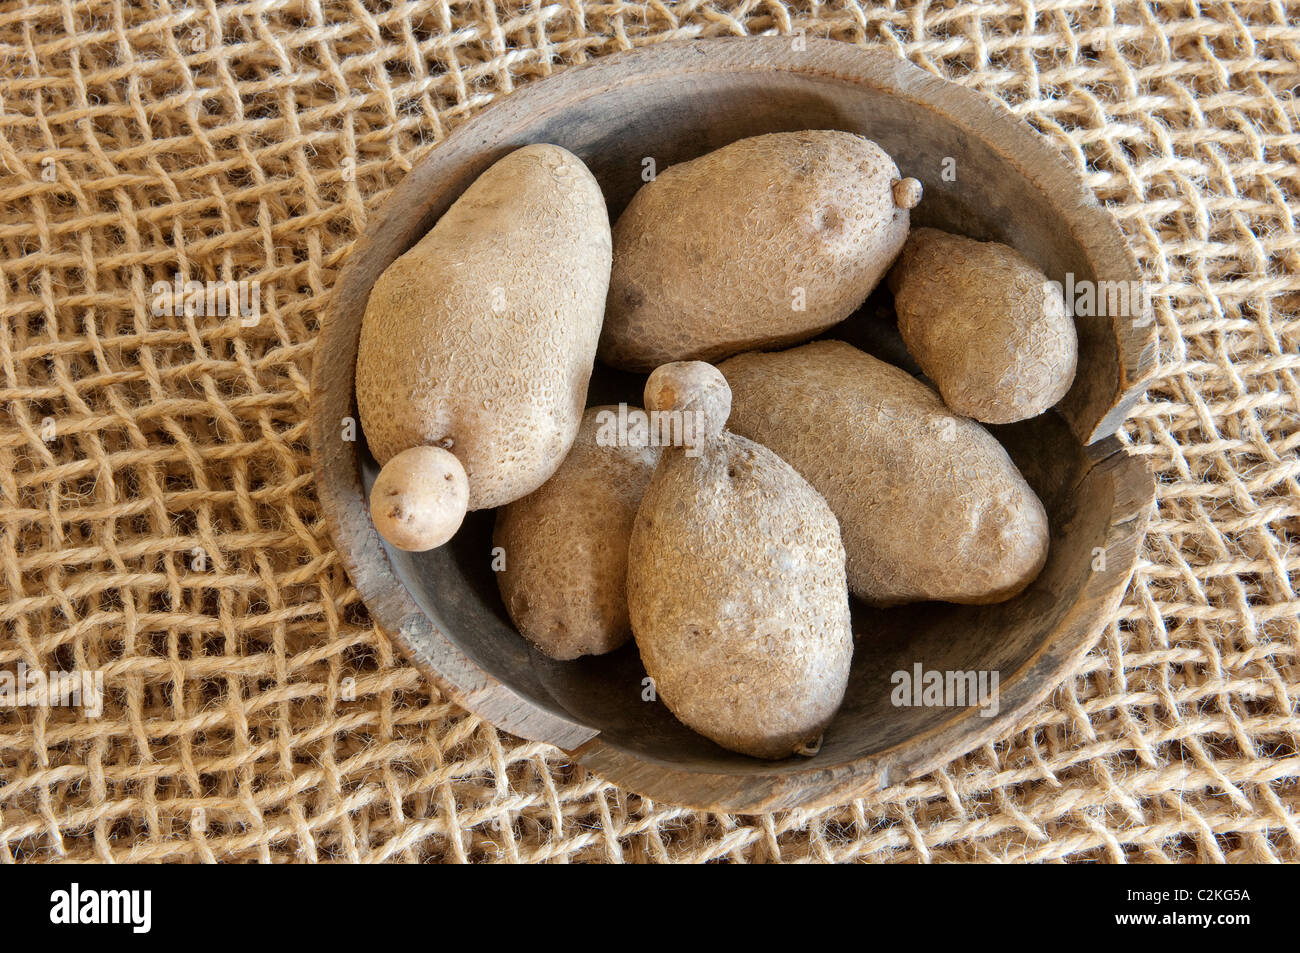 Golden Wonder Potato (Solanum tuberosum Golden Wonder). Potatoes a wooden bowl. Stock Photo